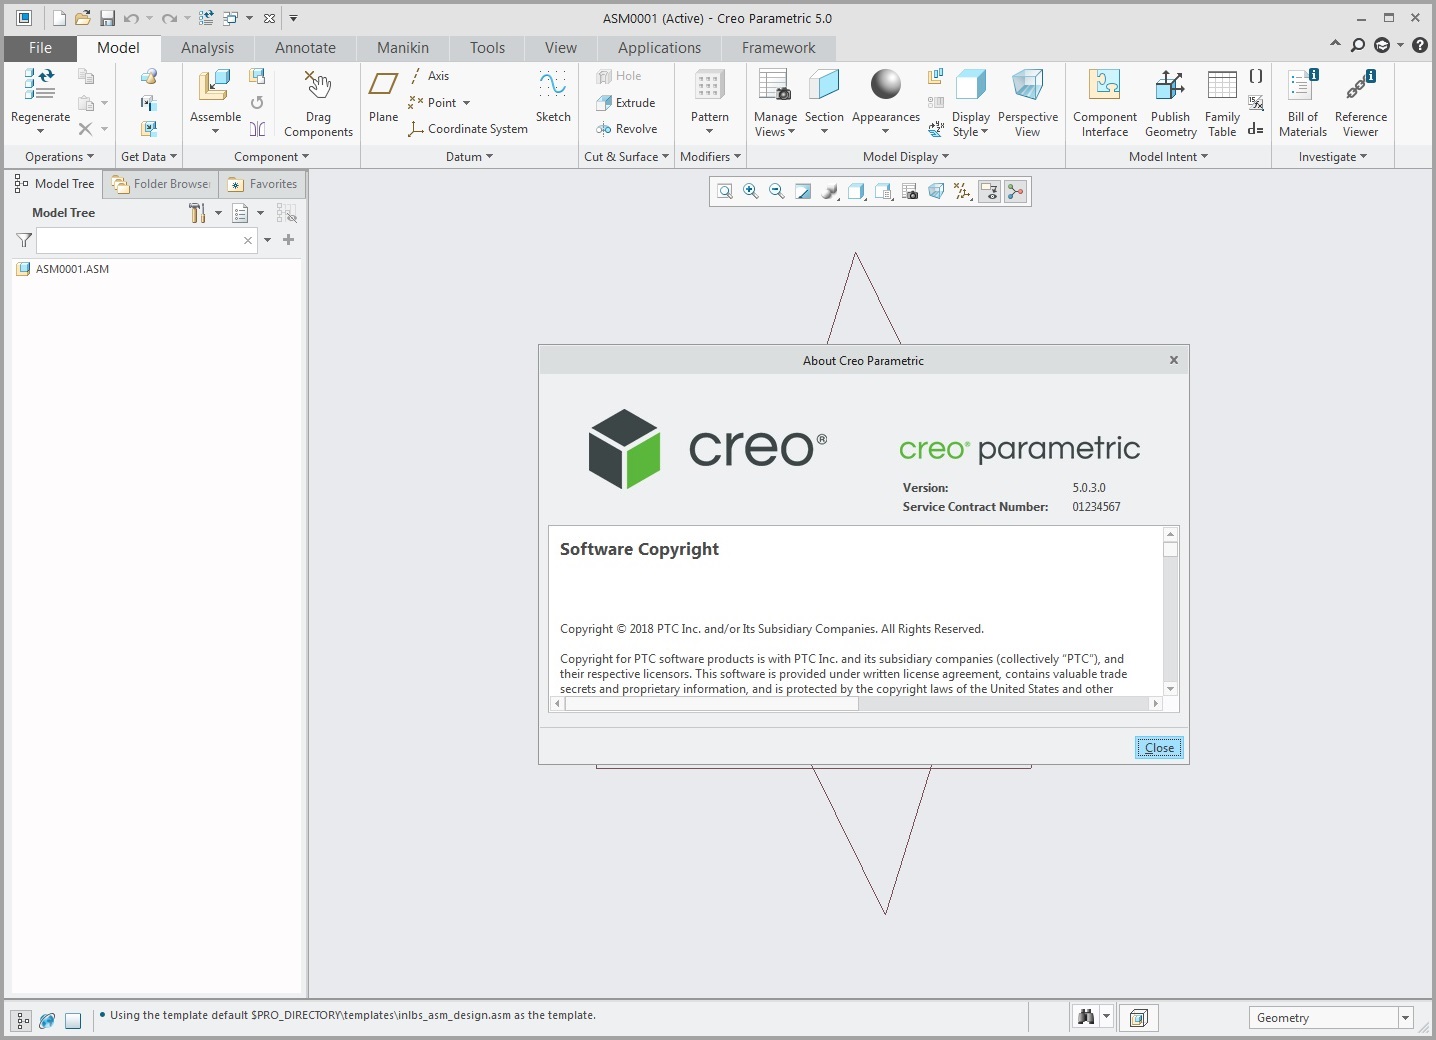 Working with PTC Creo 5.0.3.0 parametric full license